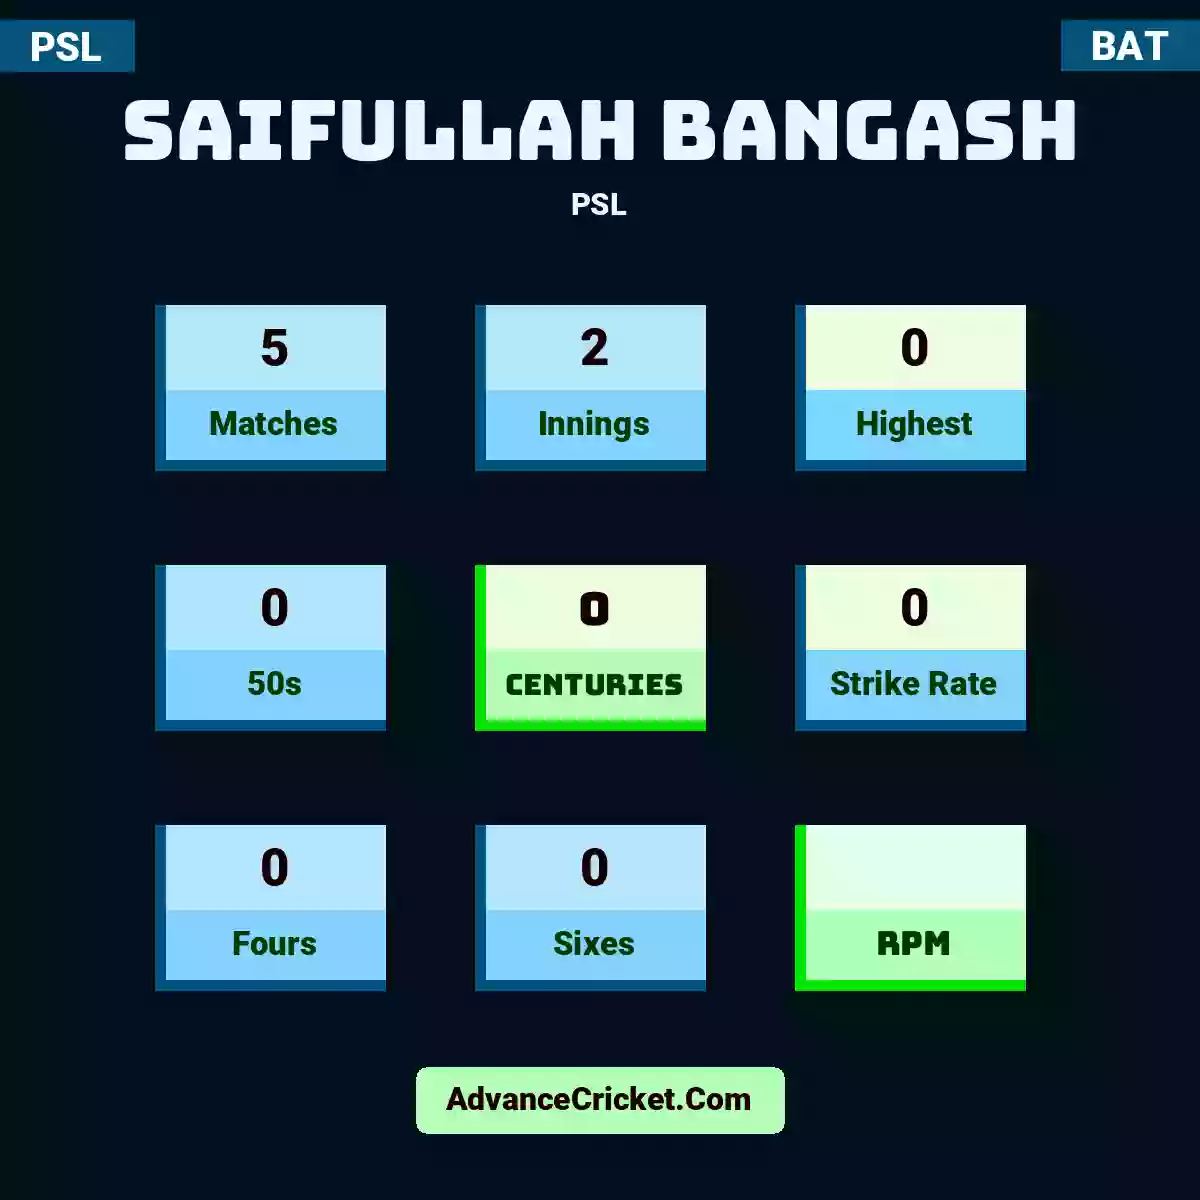 Saifullah Bangash PSL , Saifullah Bangash played 5 matches, scored 0 runs as highest, 0 half-centuries, and 0 centuries, with a strike rate of 0. S.Bangash hit 0 fours and 0 sixes.